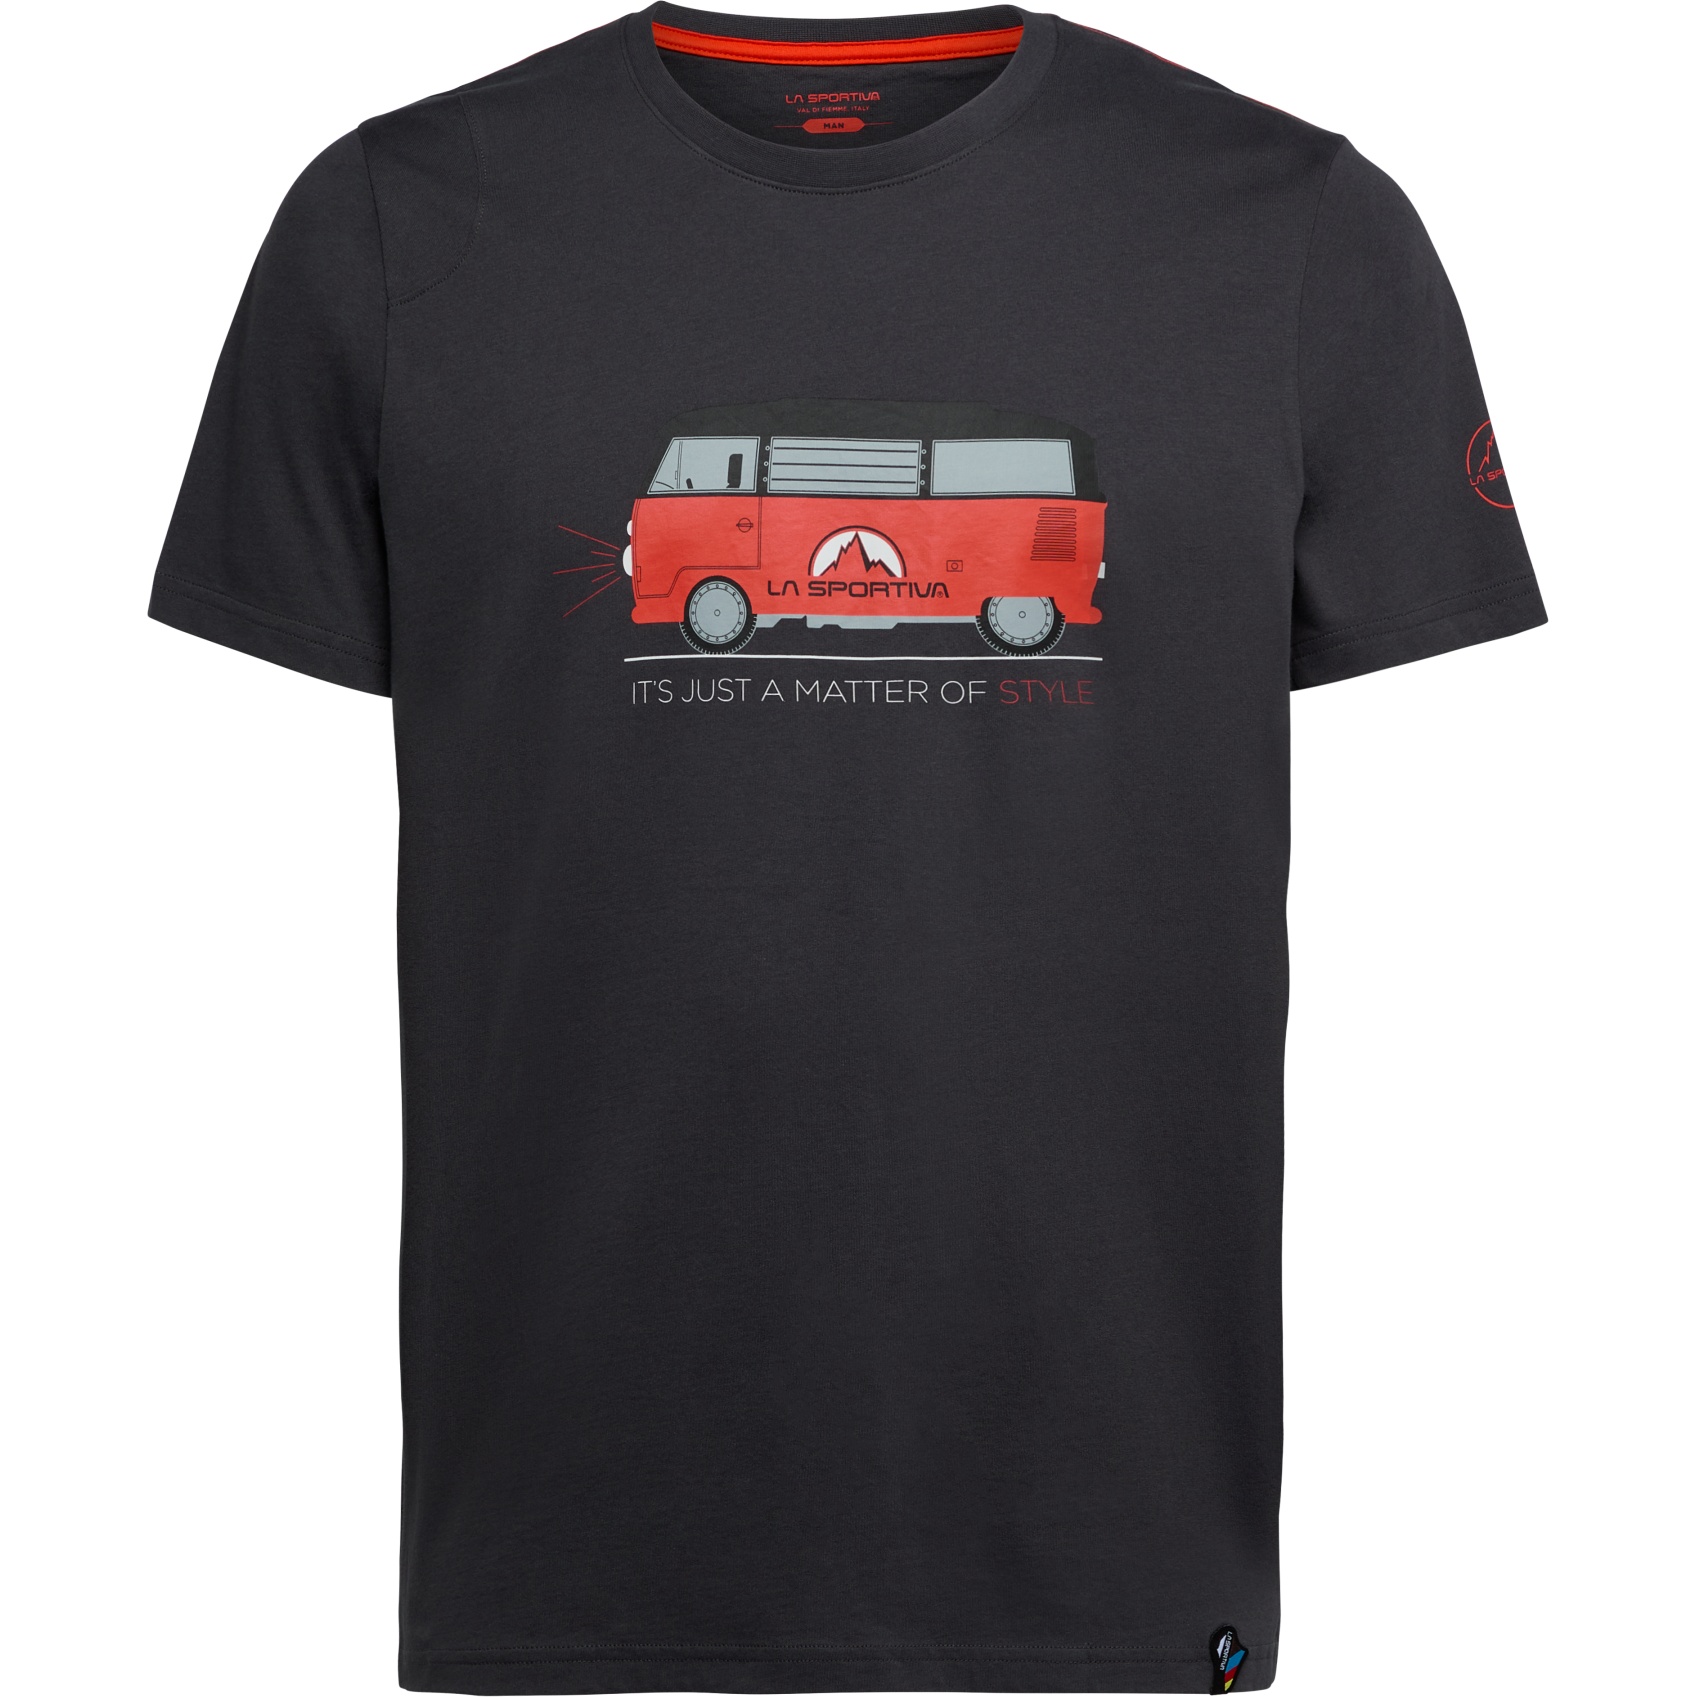 Bild von La Sportiva Van T-Shirt Herren - Carbon/Cherry Tomato